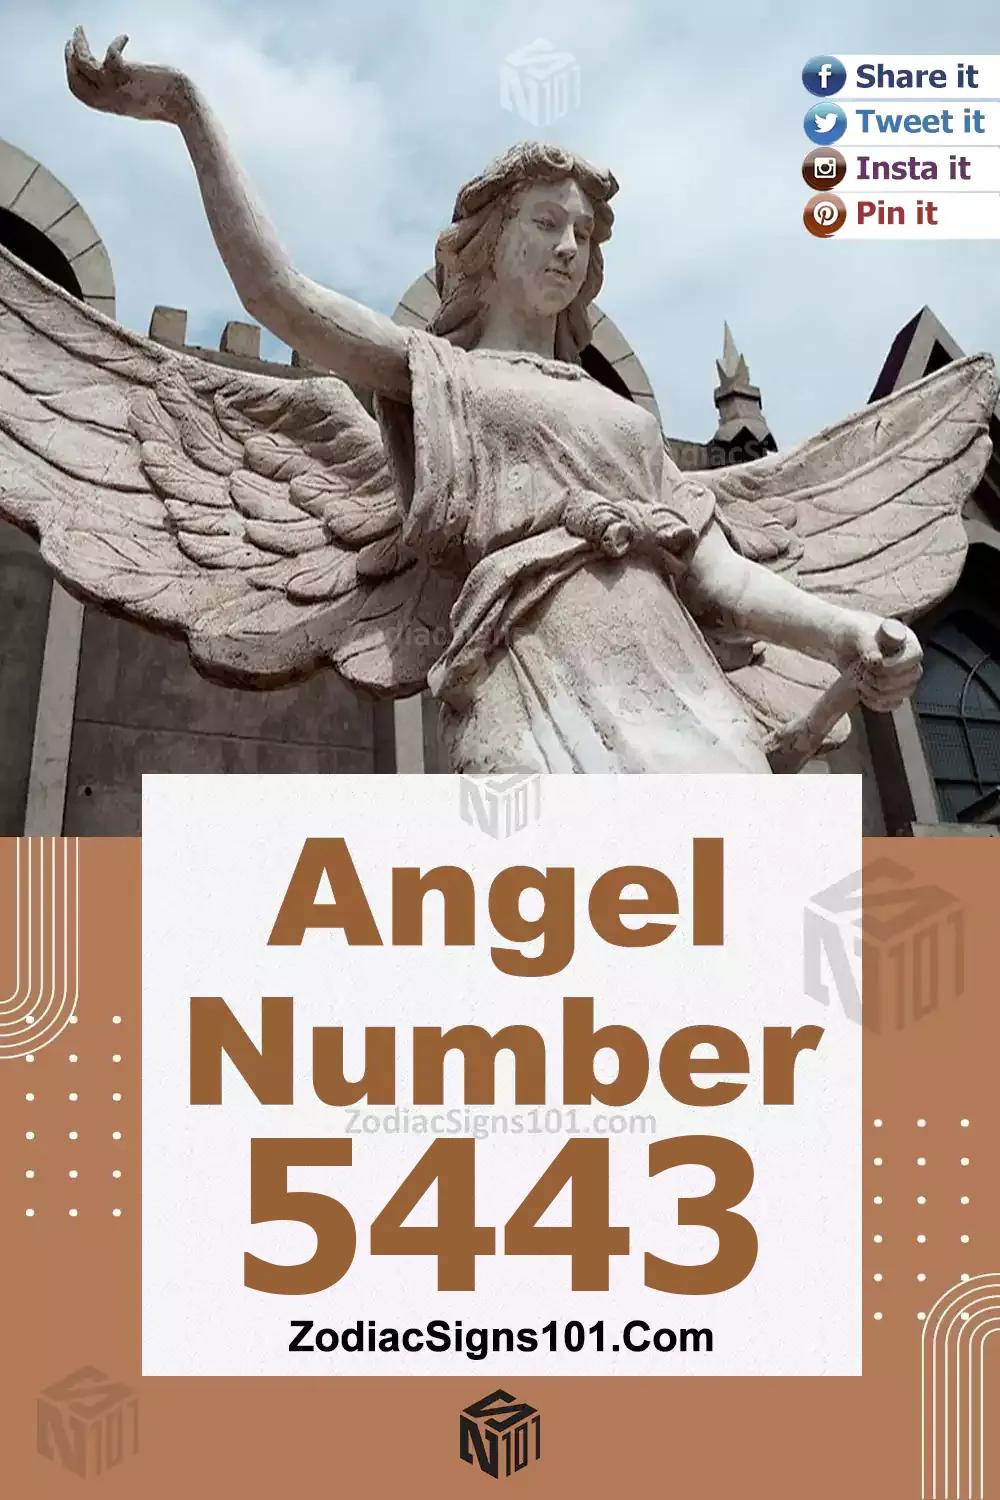 5443-Angel-Number-Meaning.jpg